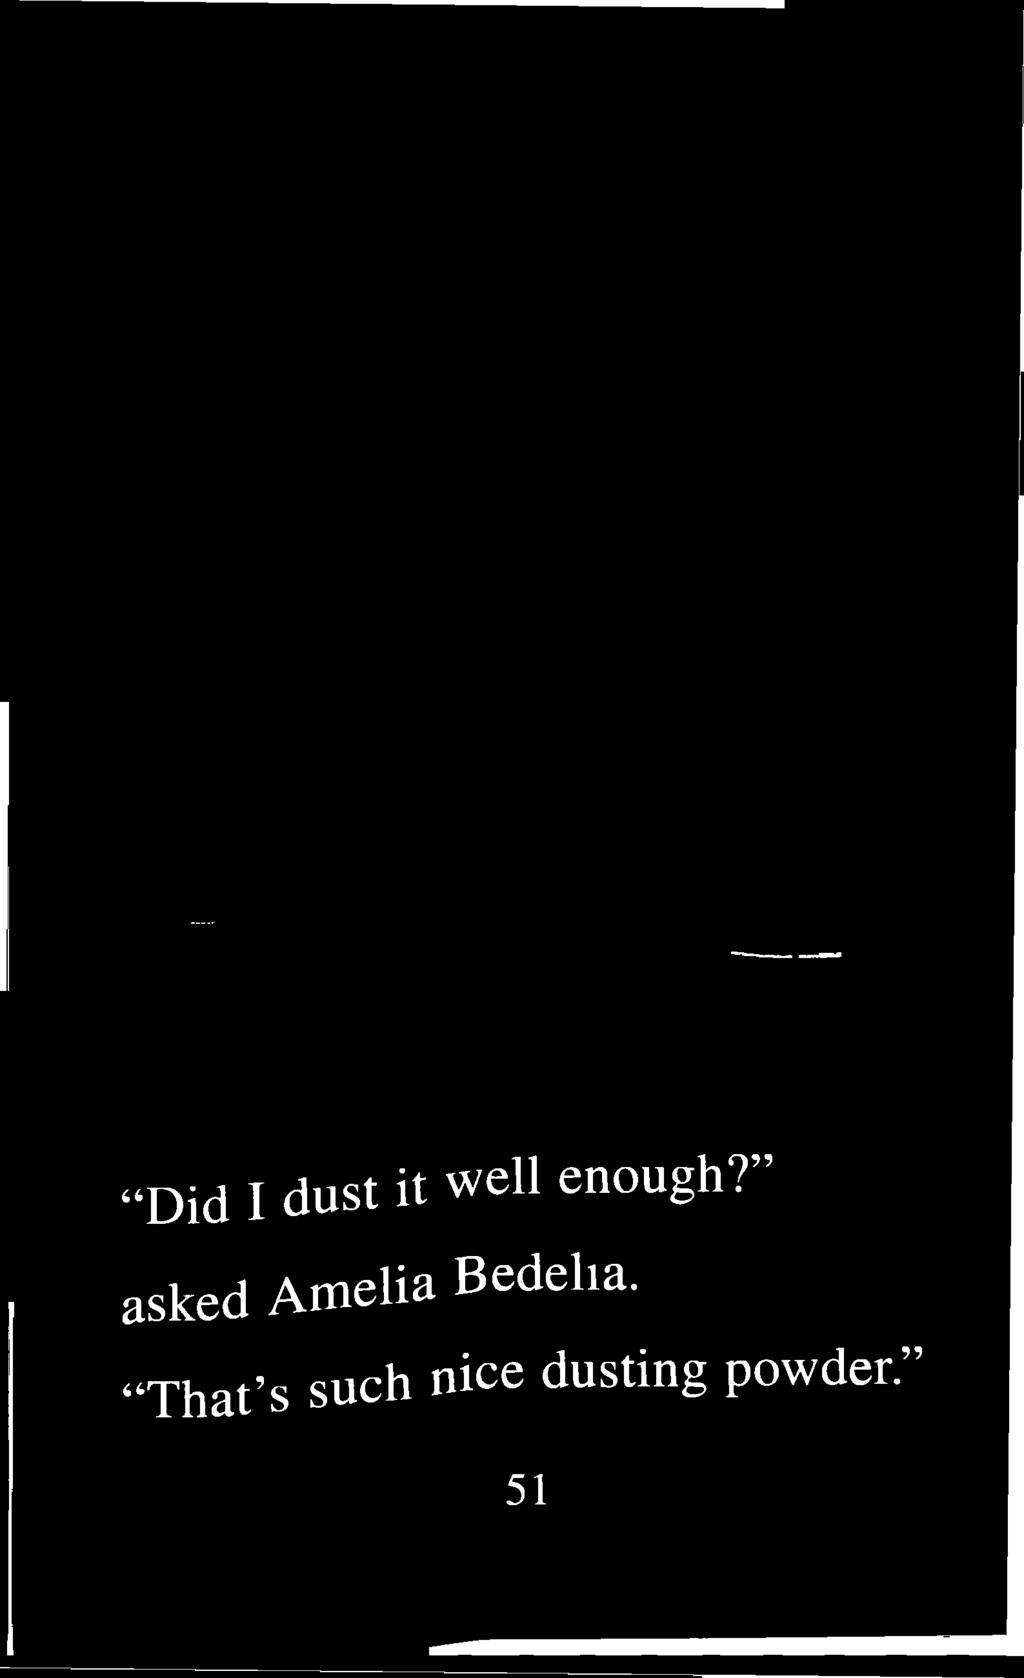 " asked Amelia